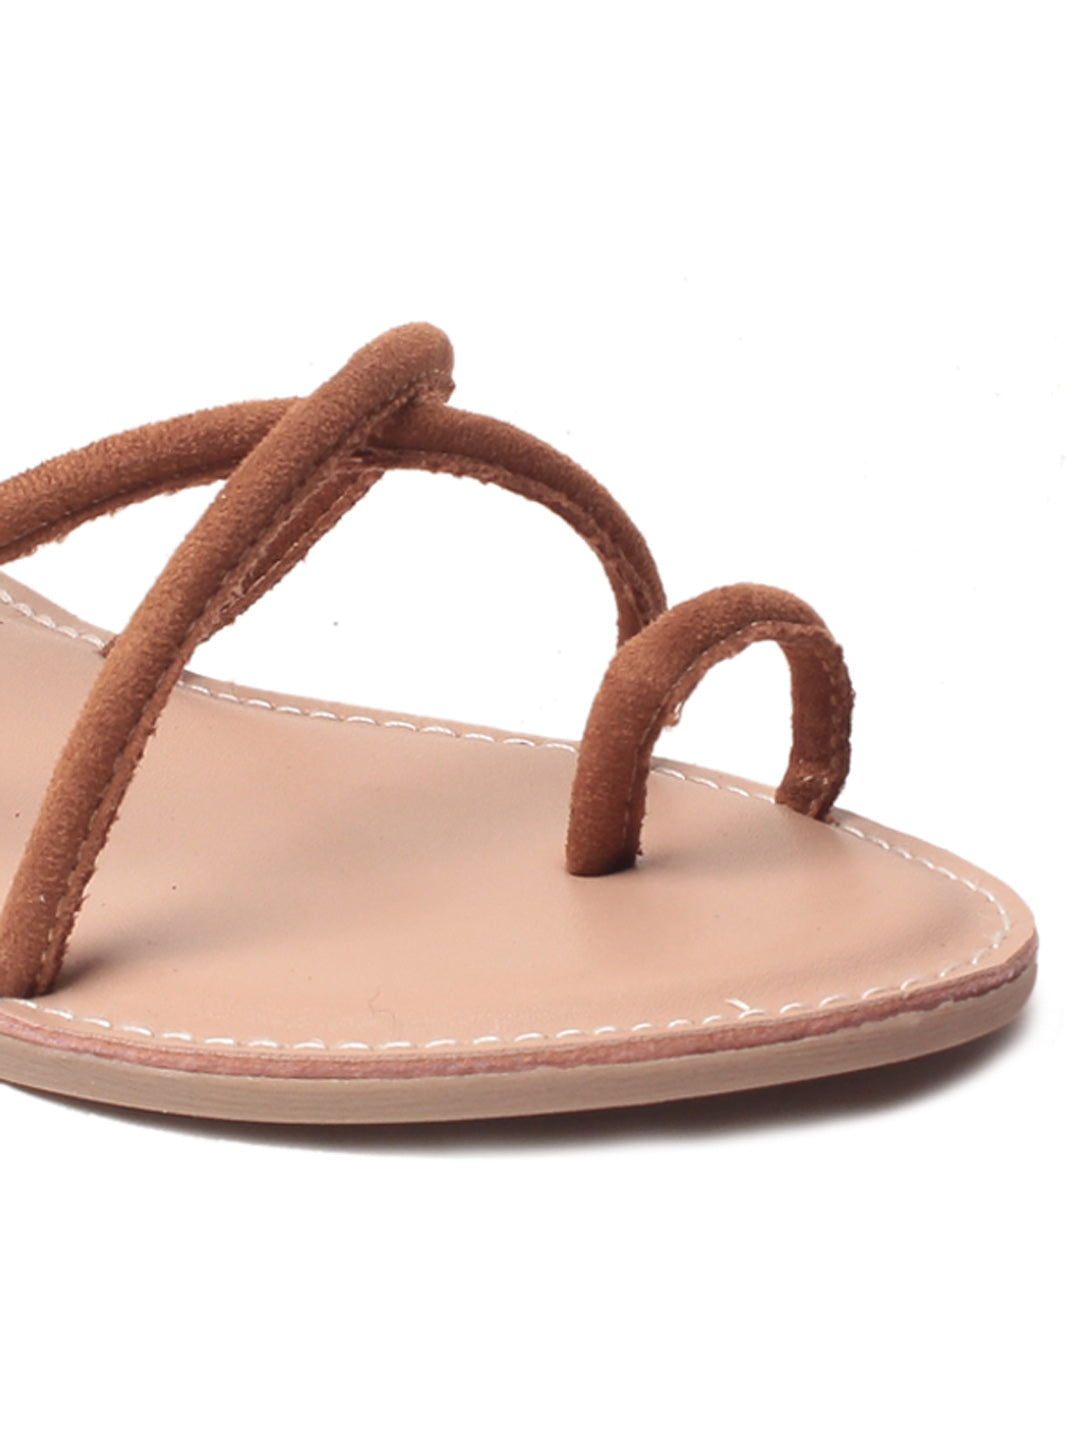 Gnist Super Cute Sandal for Women